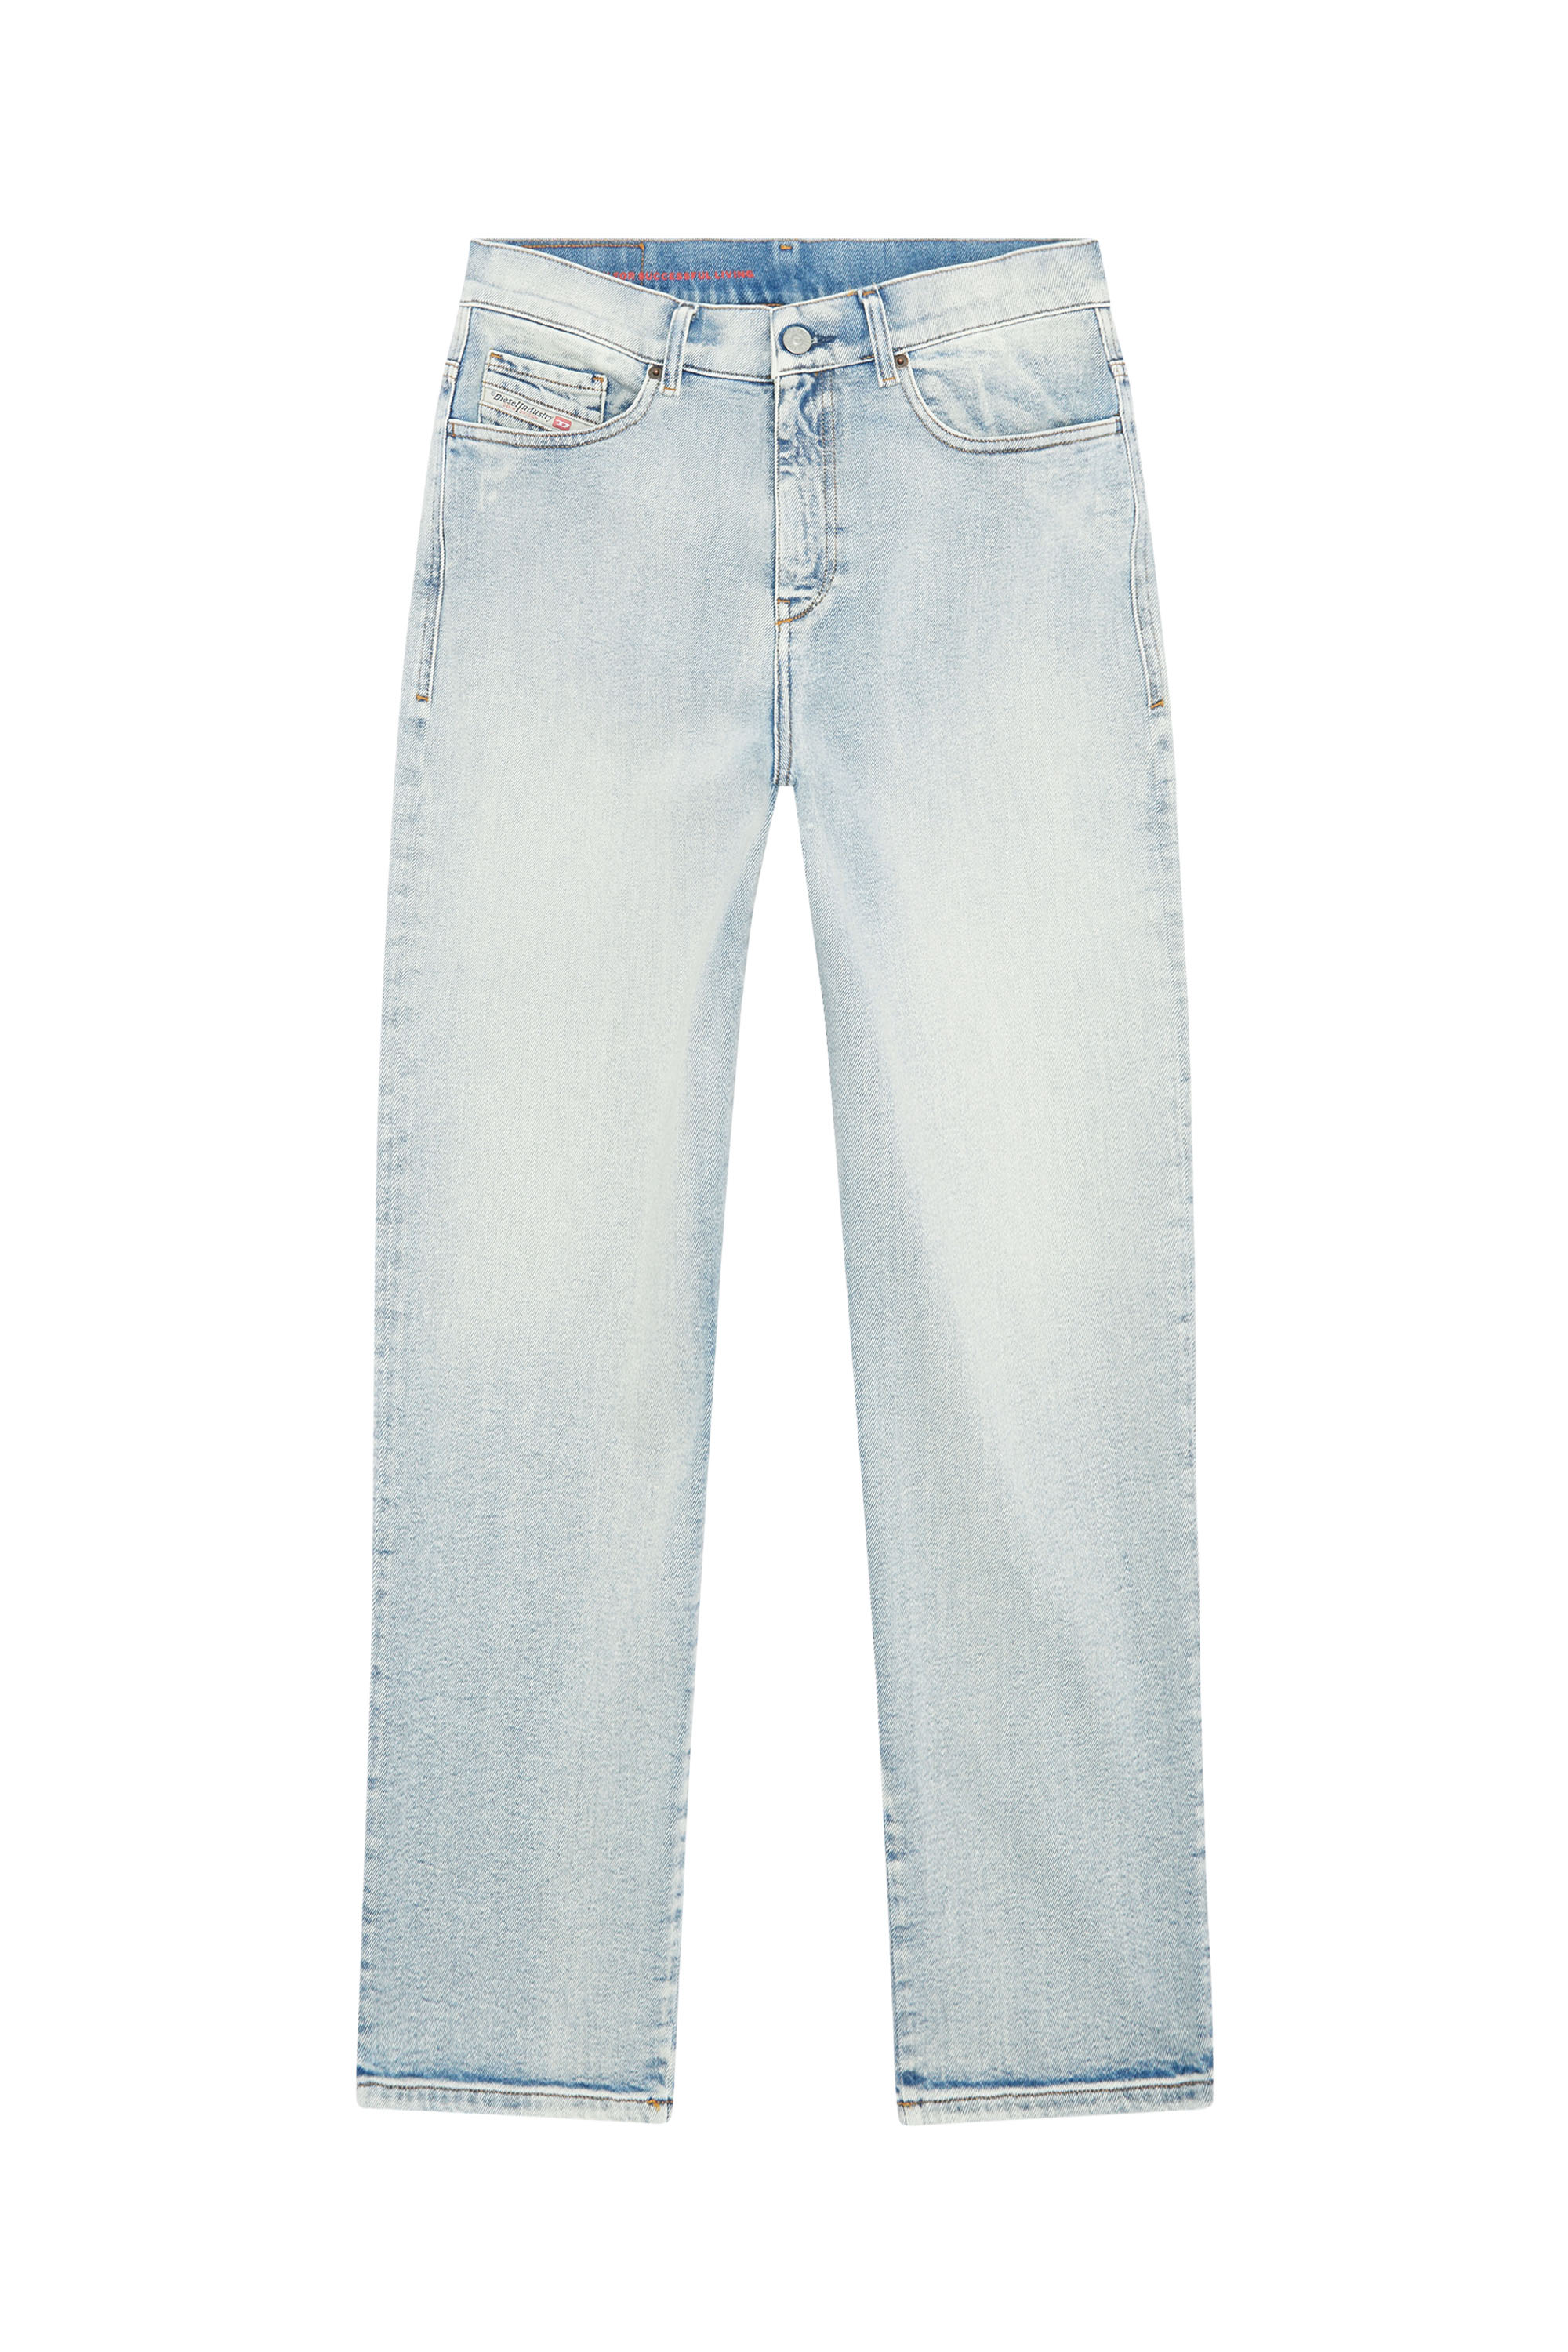 Boyfriend Jeans 2016 D-Air 9C08L, Bleu Clair - Jeans